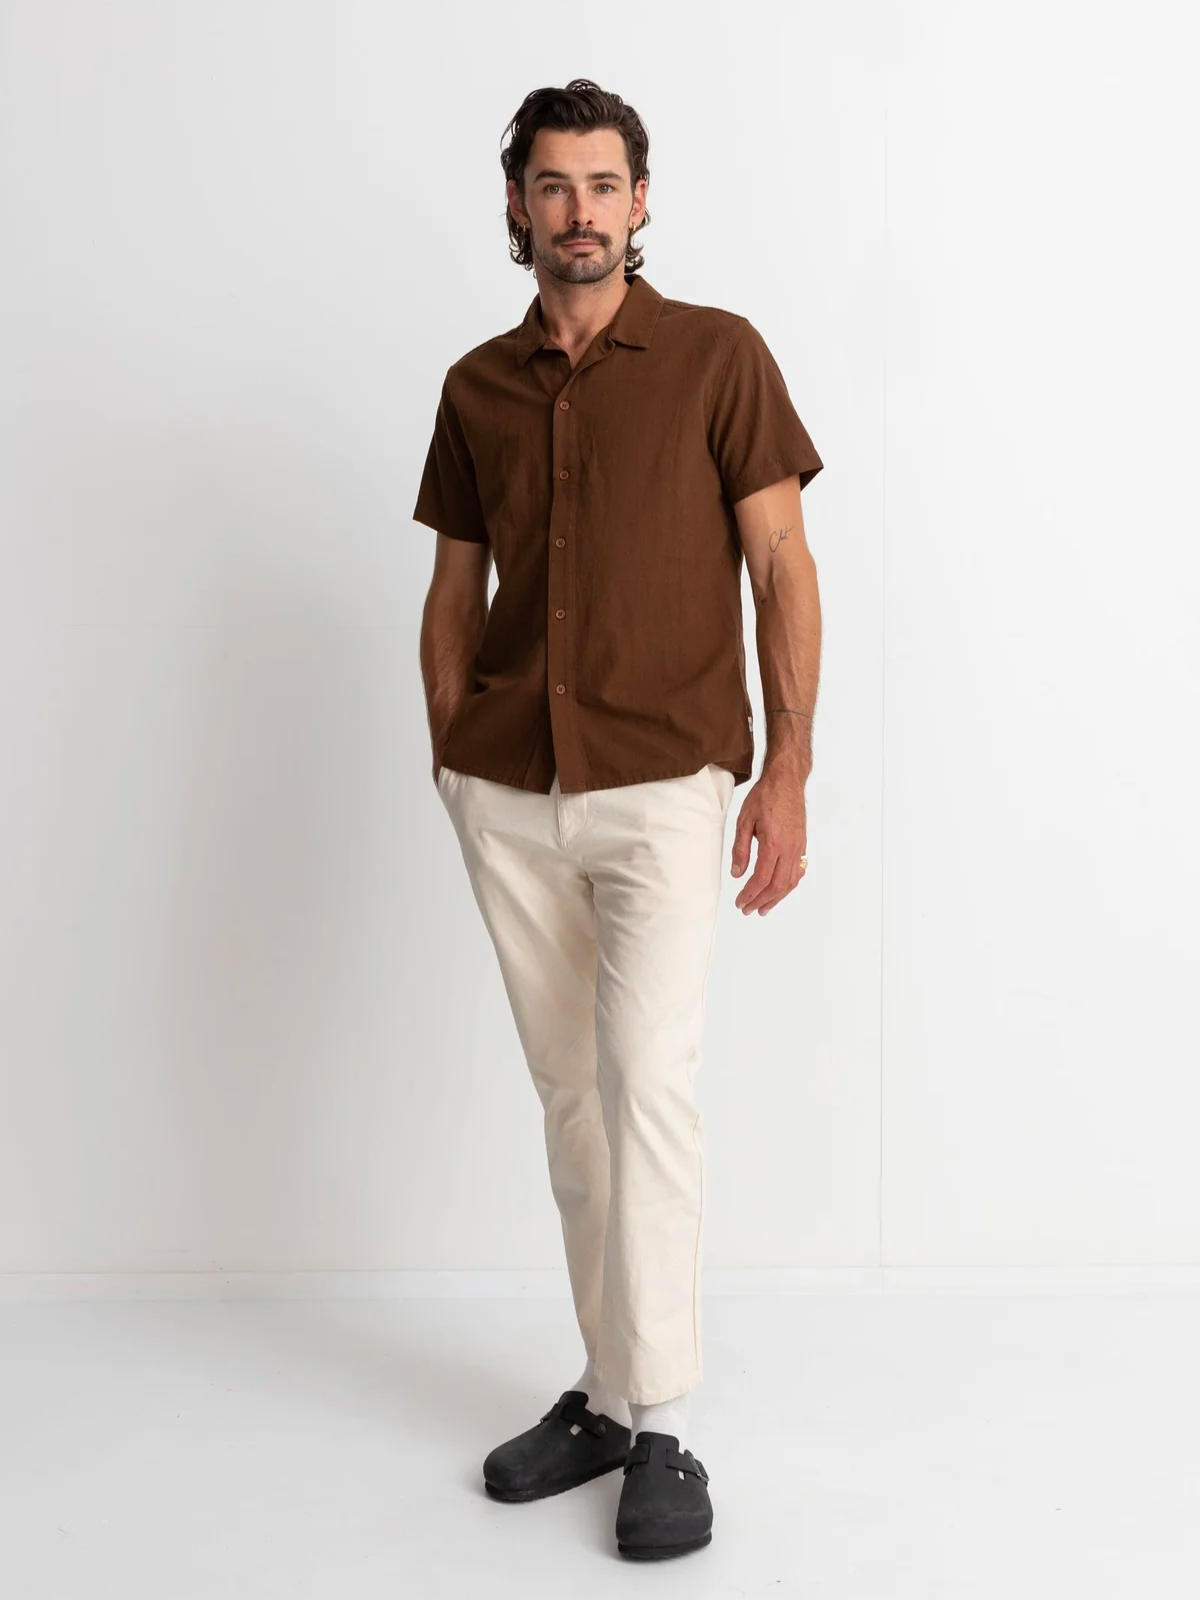 rhythm classic linen ss short sleeve shirt chocolate brown button up cotton linen blend kempt athens ga georgia men's clothing store